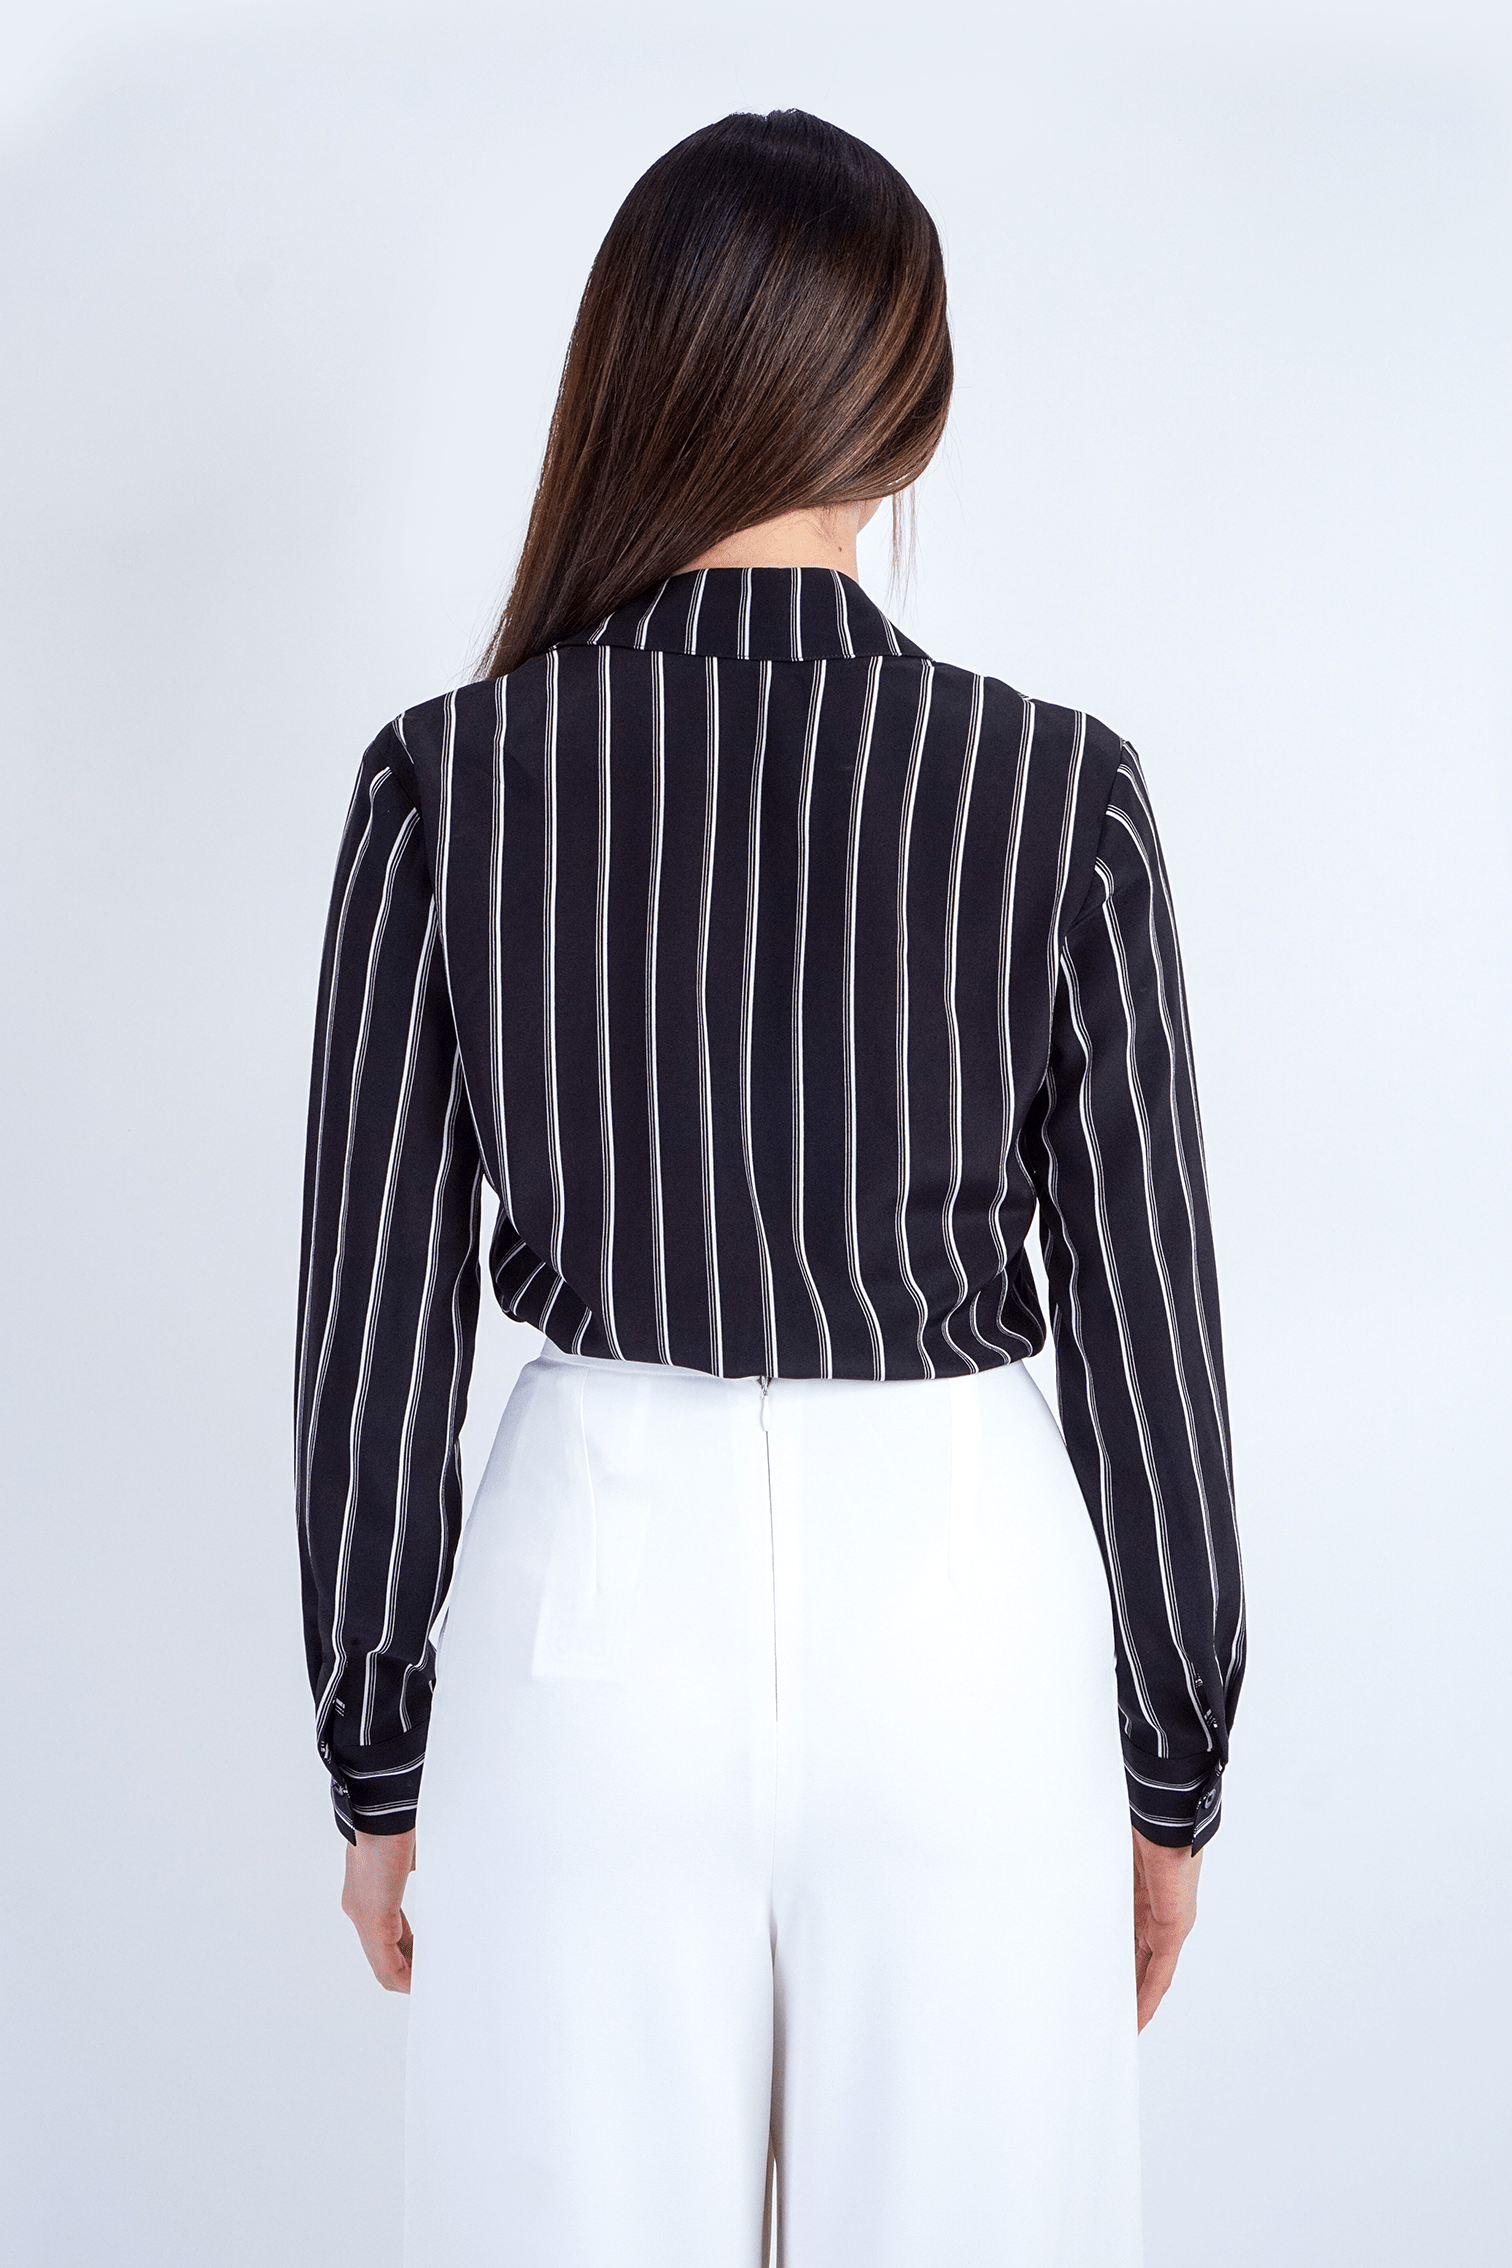 Chloe Dao TOPS Black Stripe Button Up Jennifer Dress Shirt